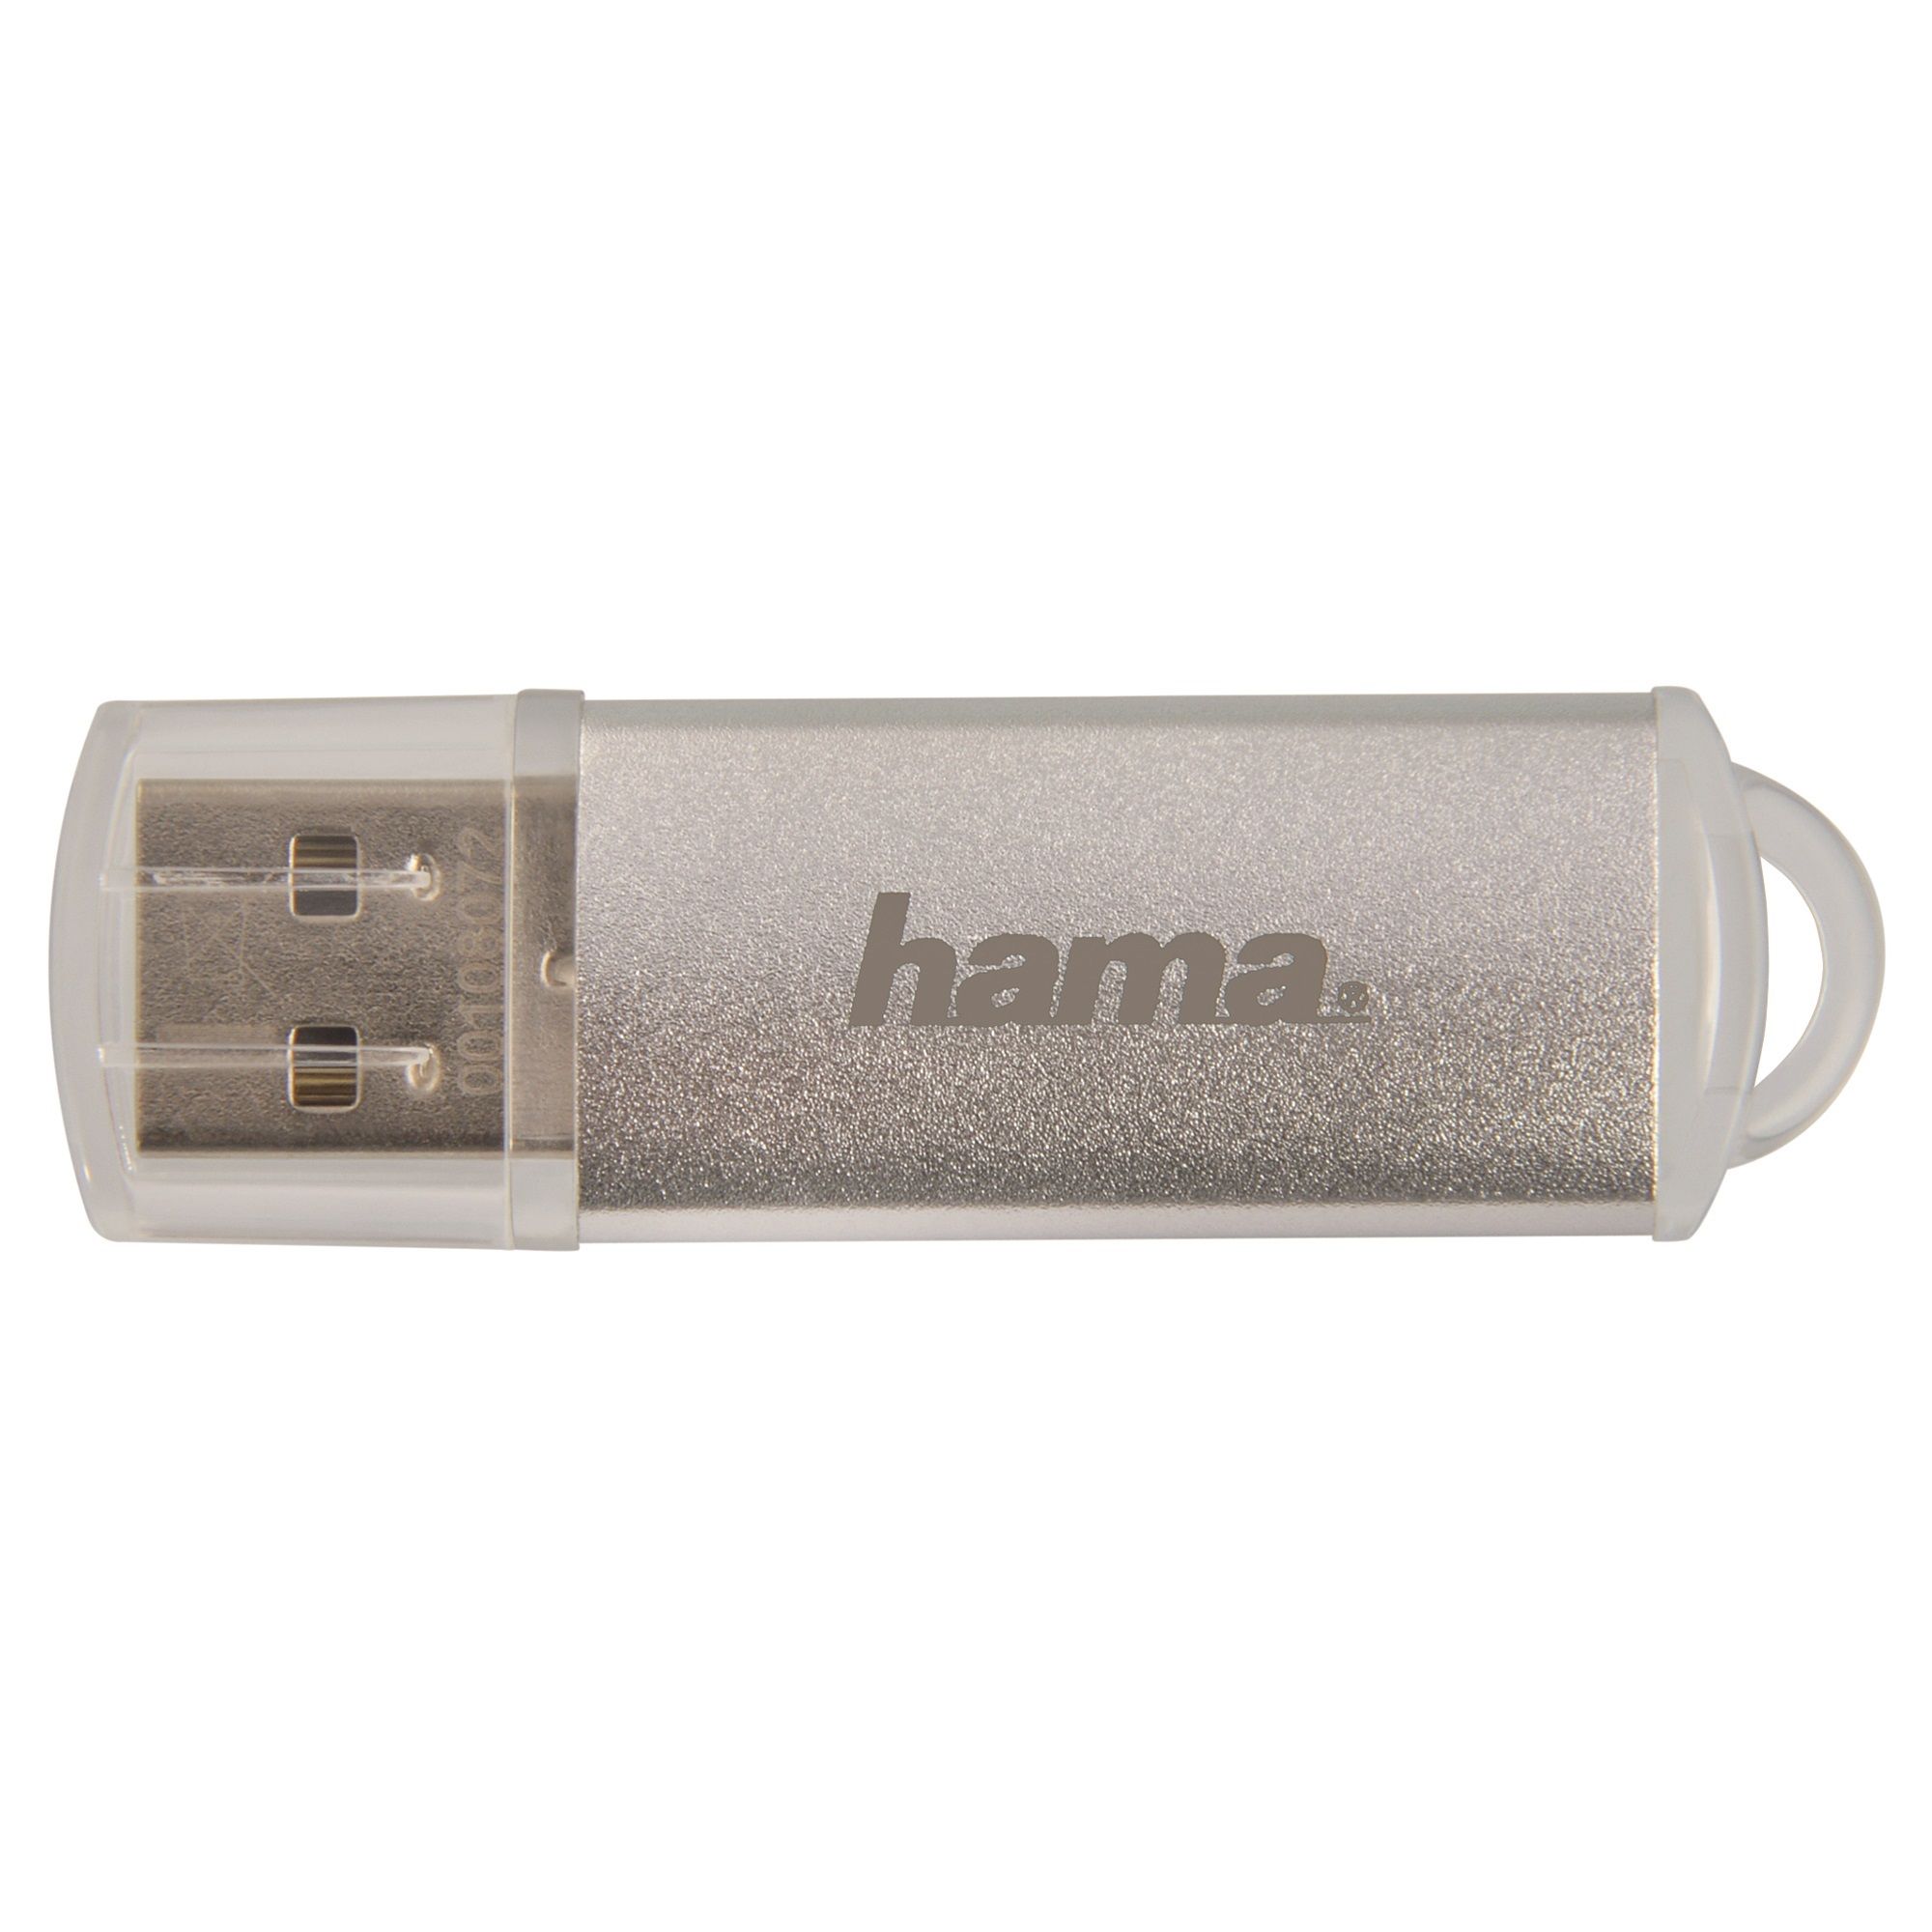  Memorie USB Hama Laeta, 128GB, USB 2.0 